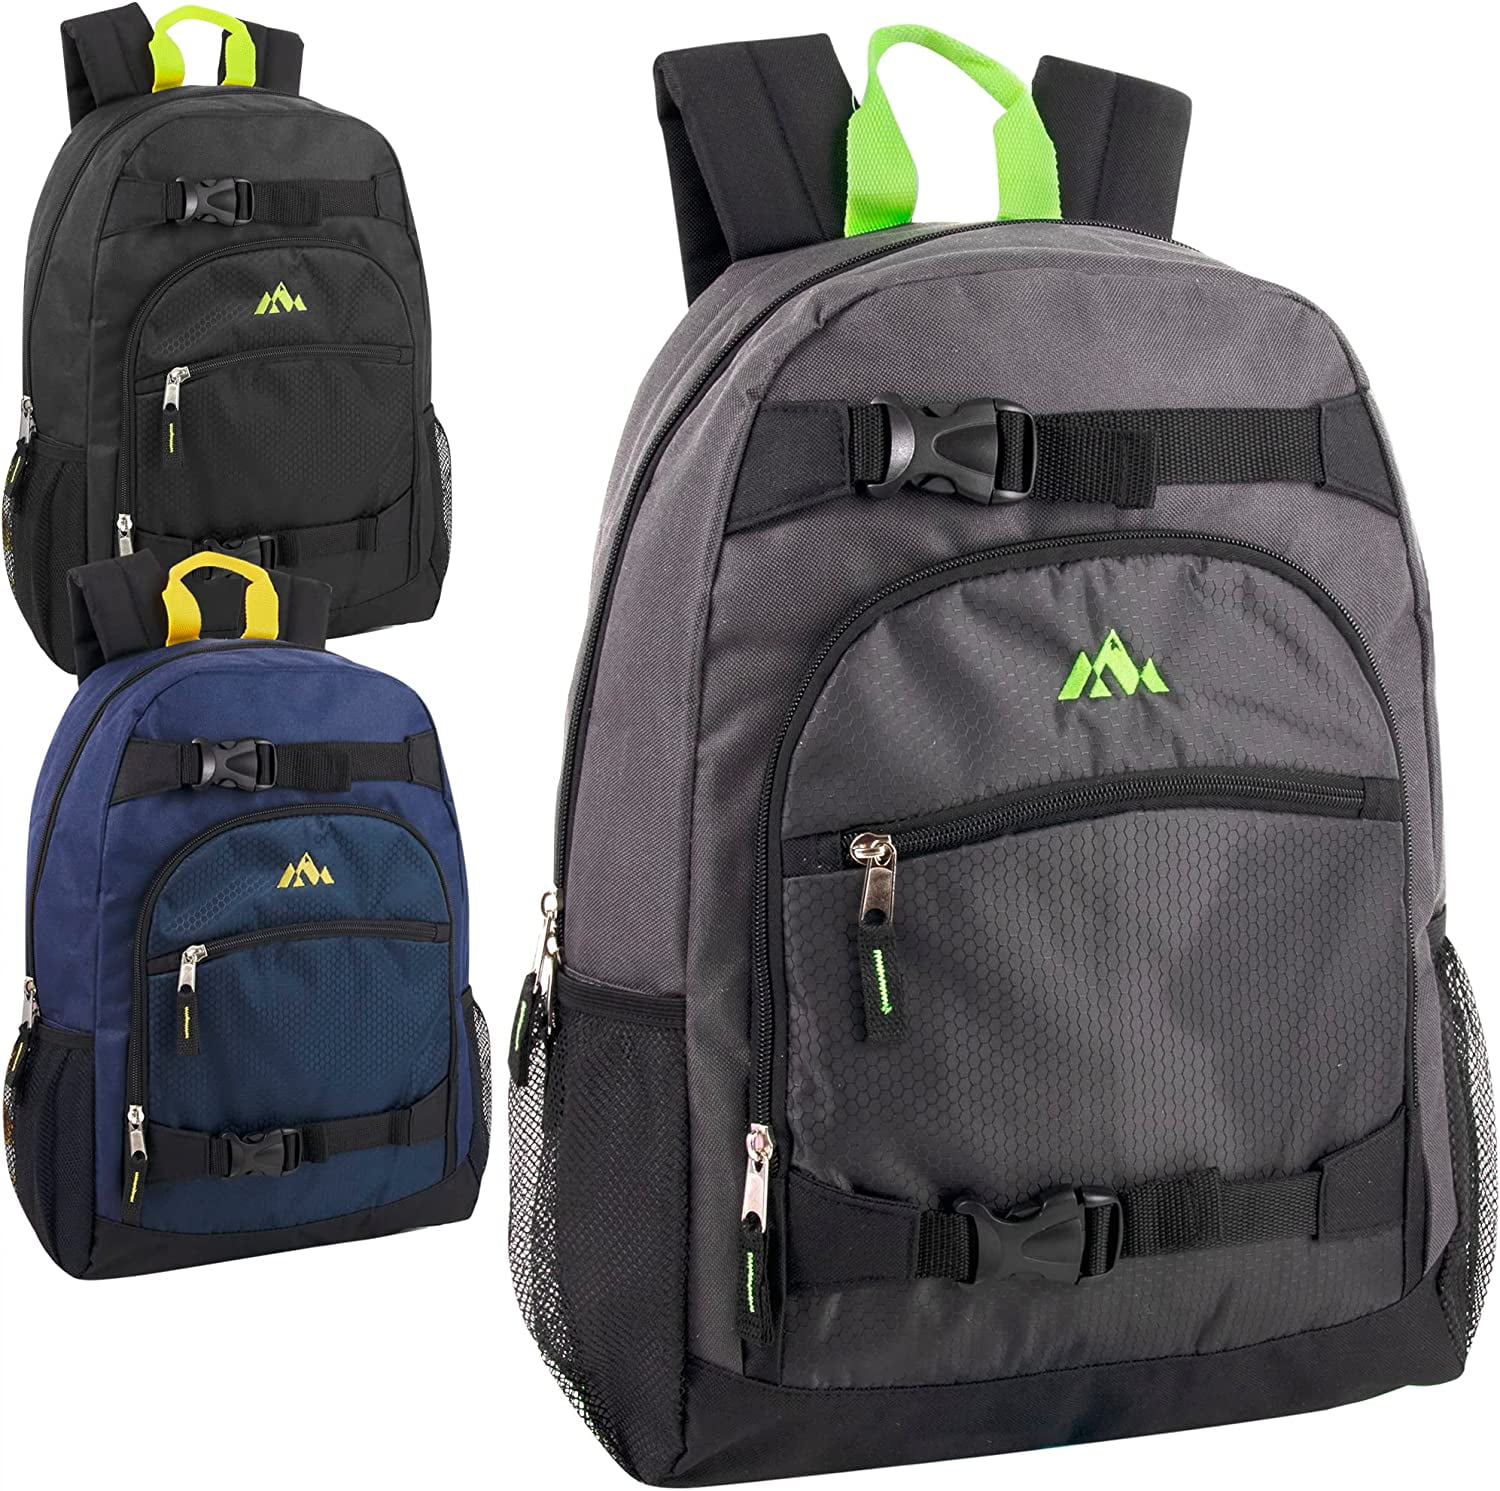 Buy wholesale Multi-pocket backpack